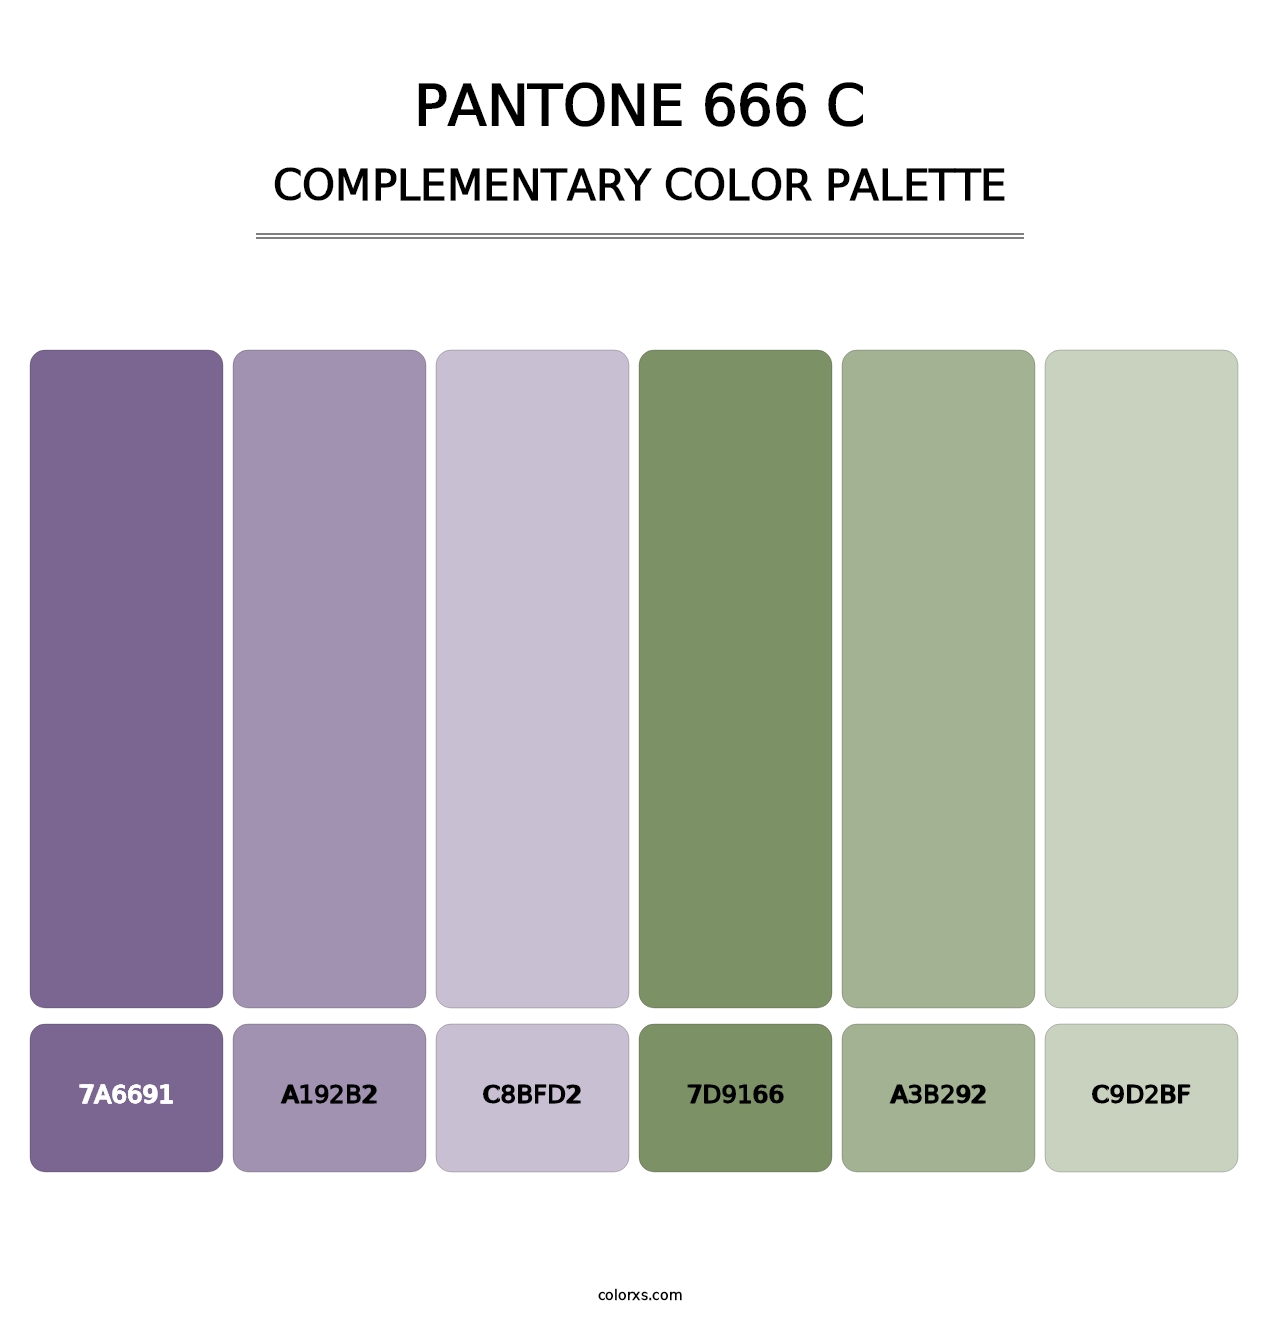 PANTONE 666 C - Complementary Color Palette